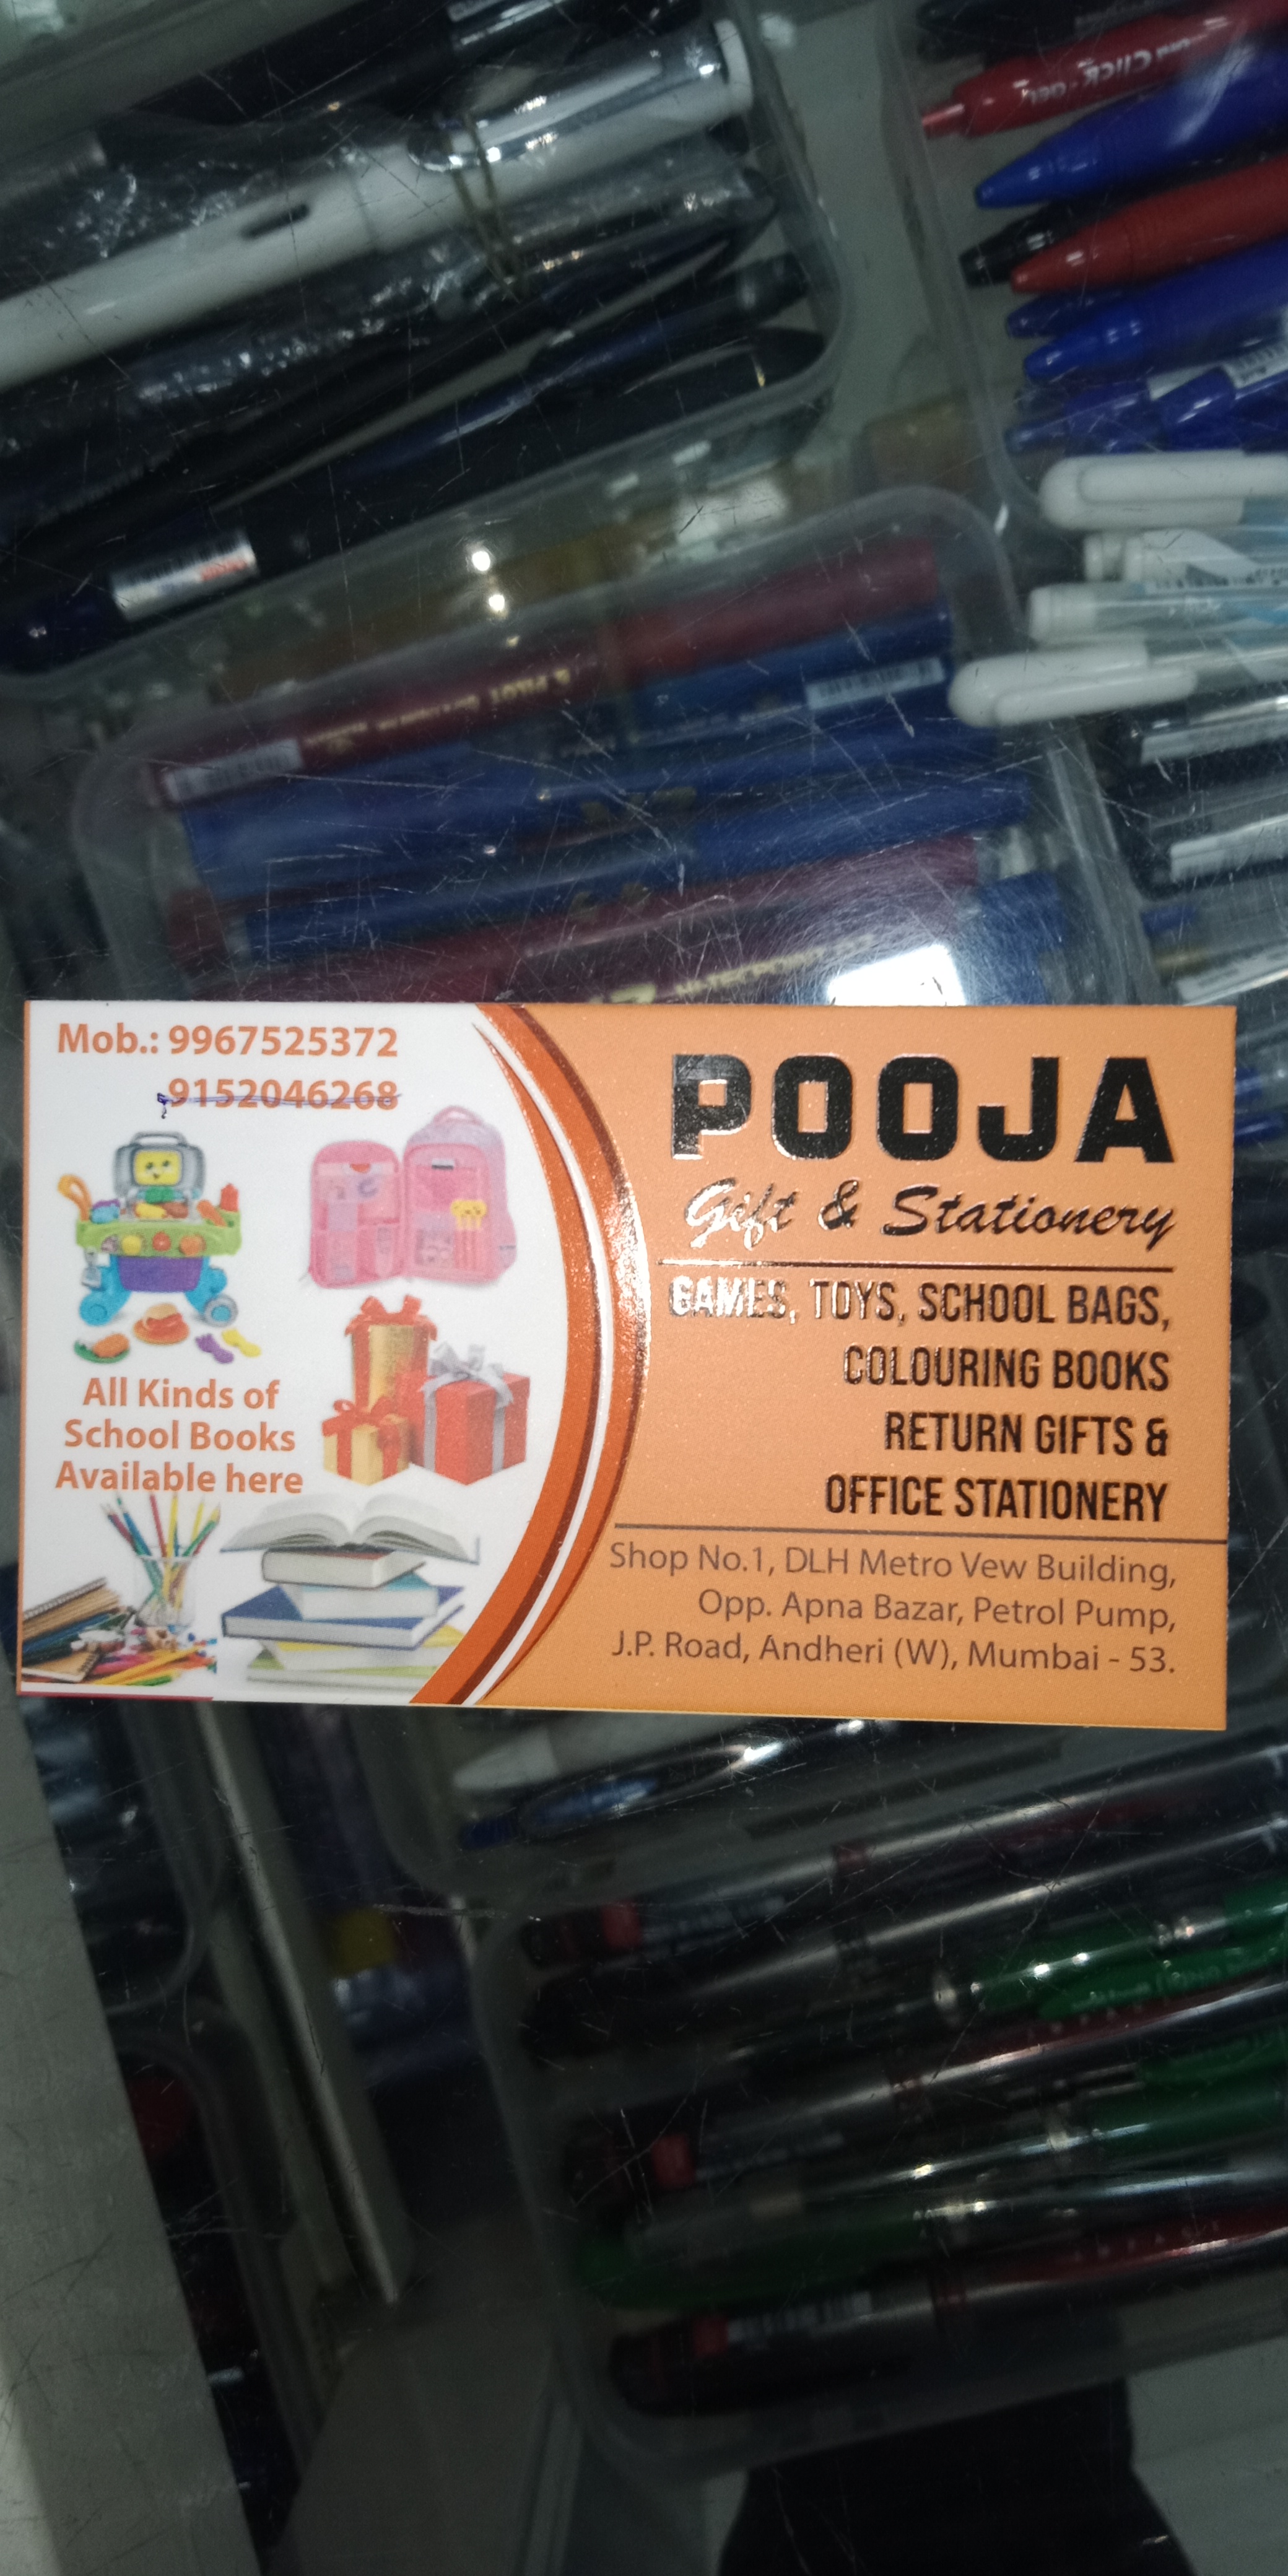 Pooja Gift & Stationery